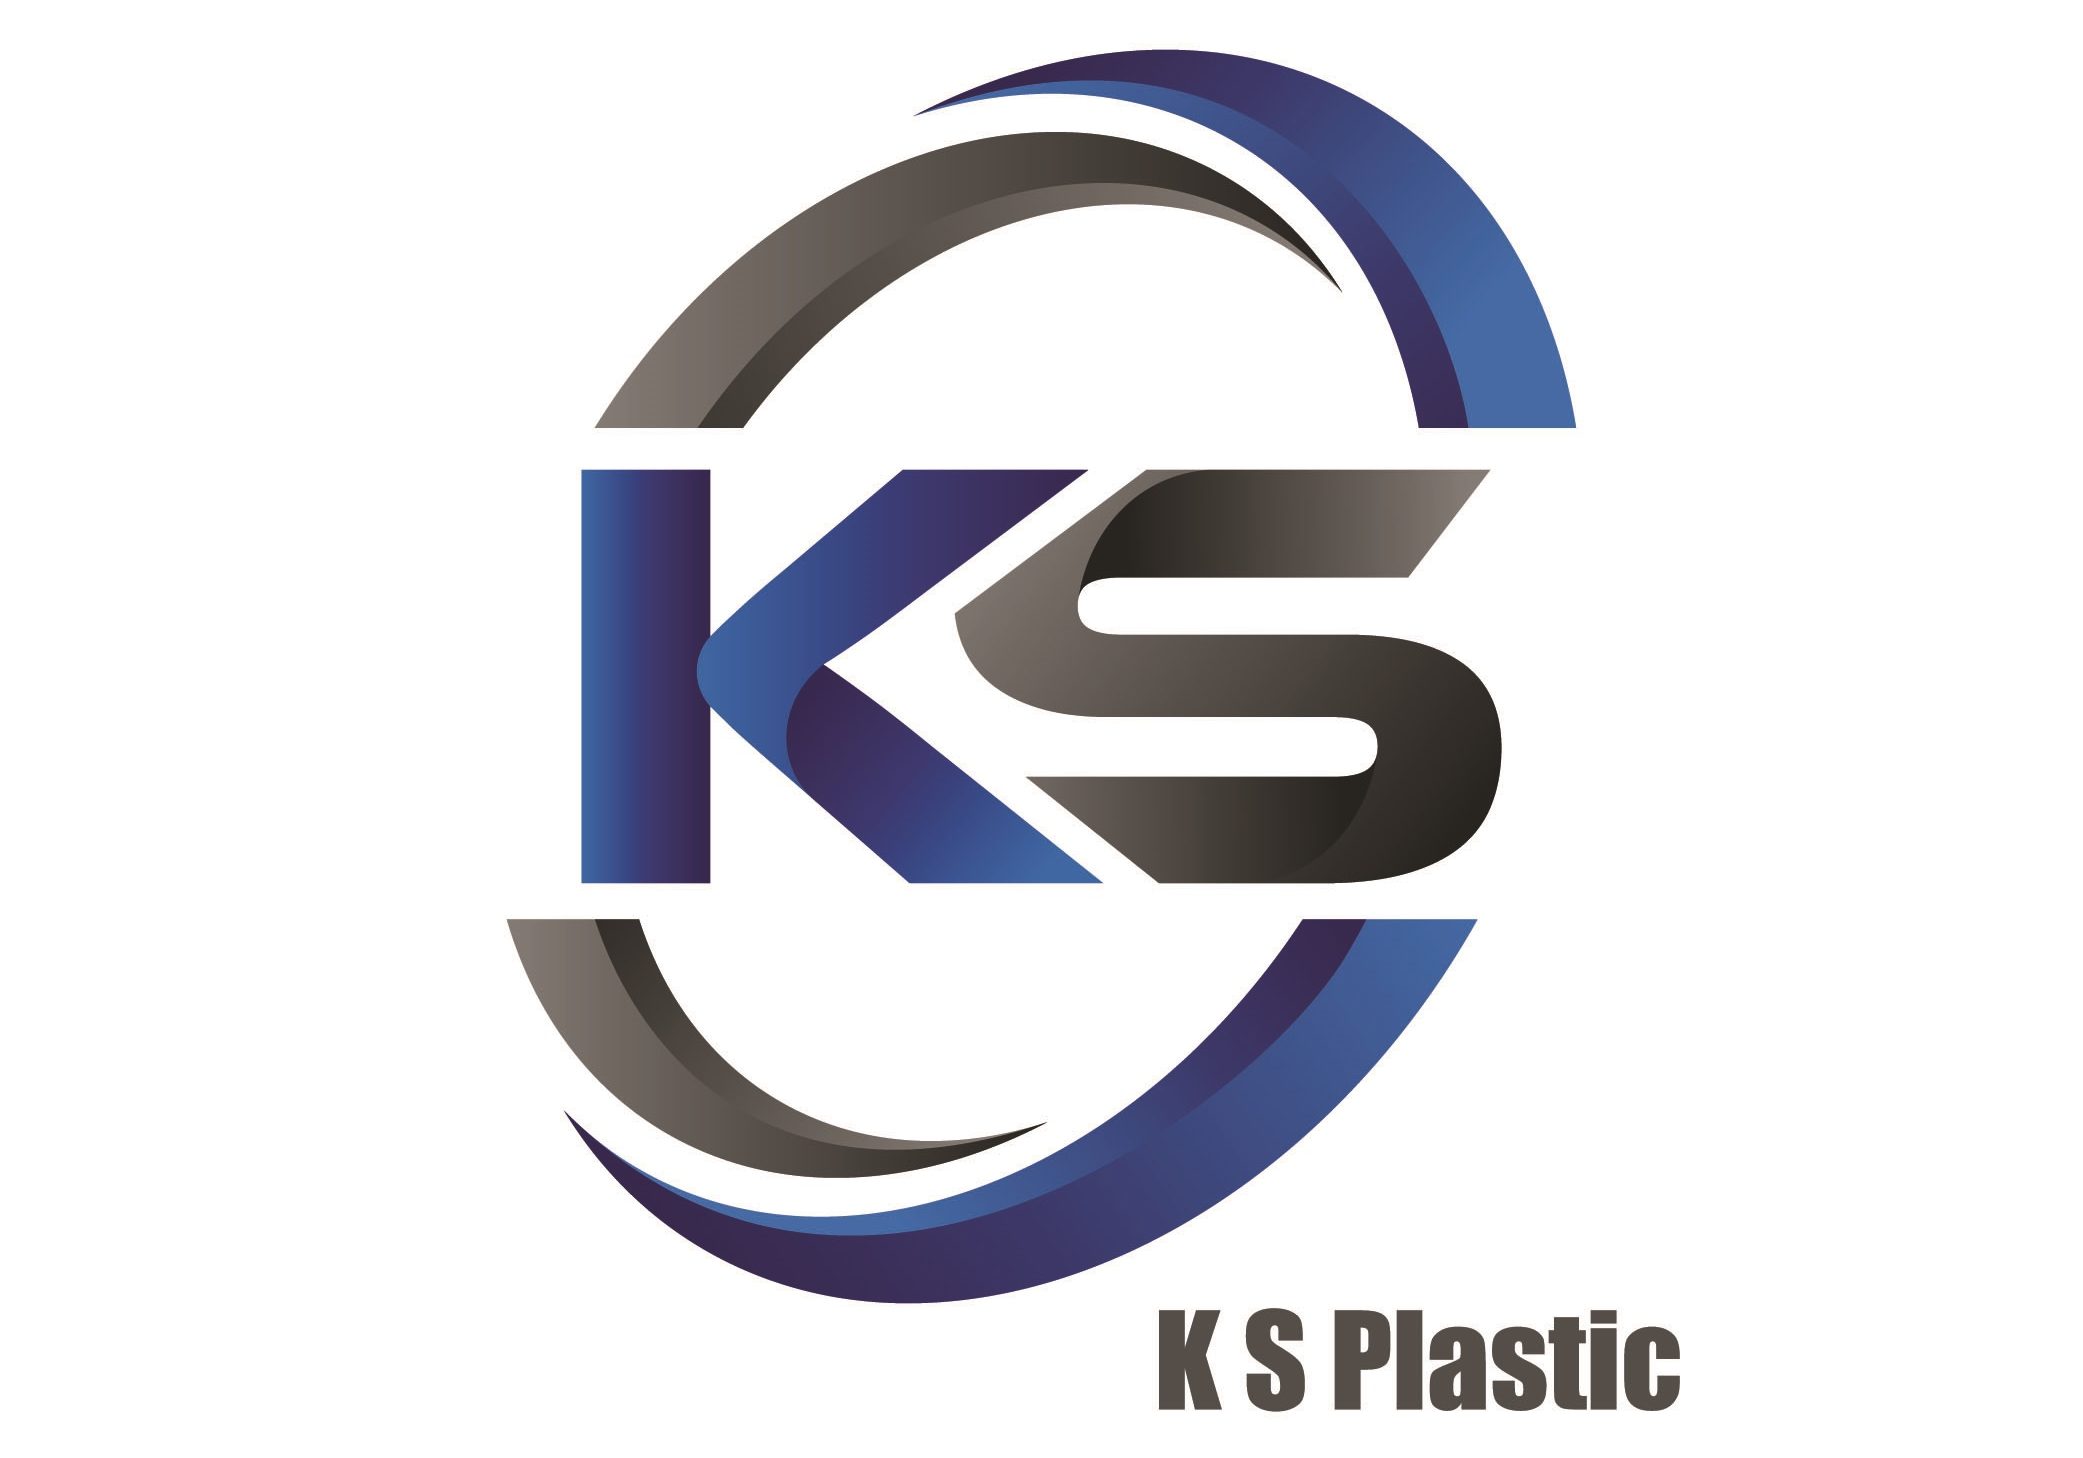 KS Plastic Ltd